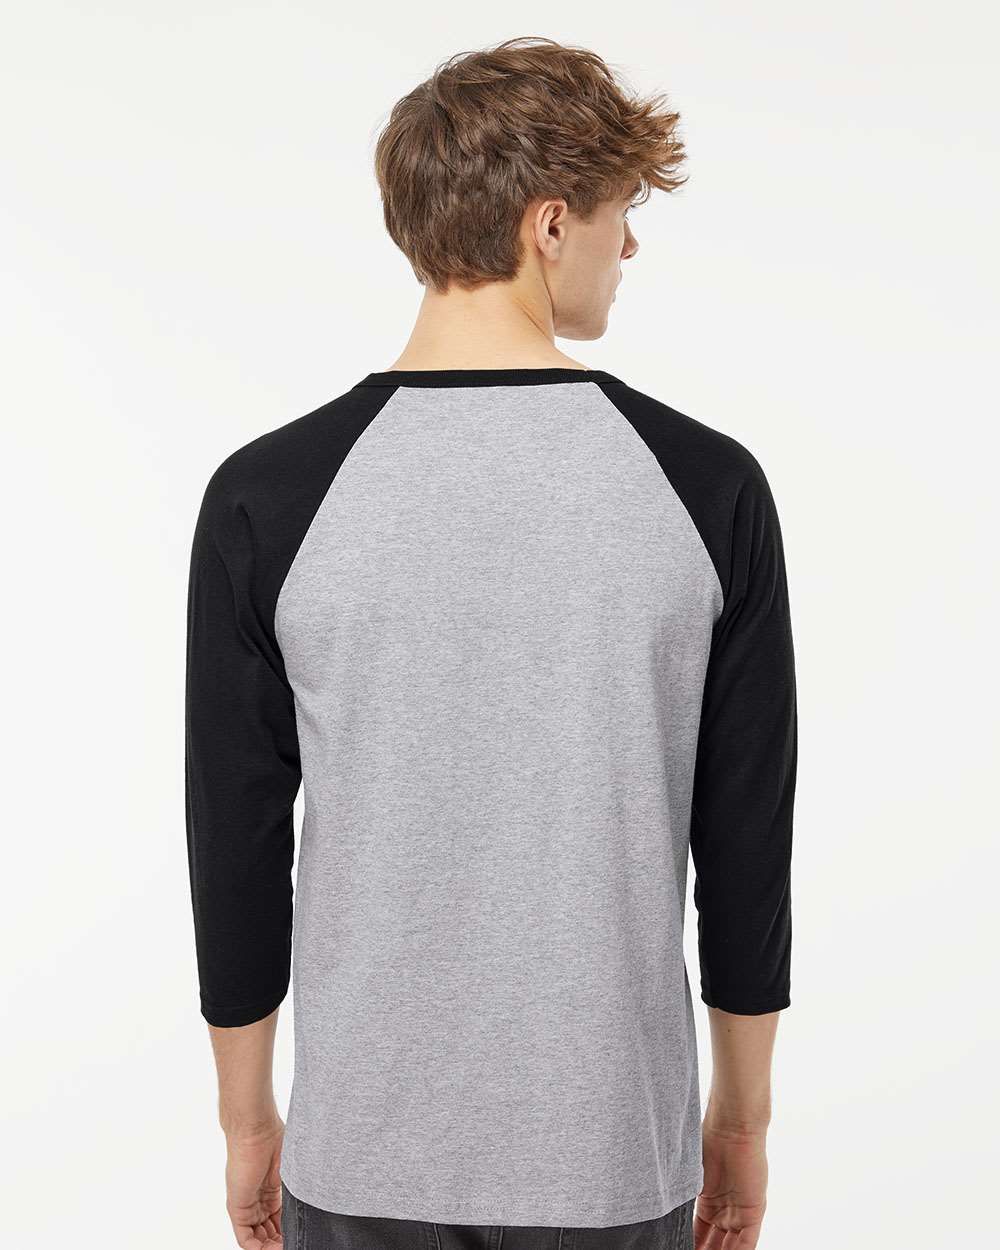 M&O Raglan Three-Quarter Sleeve Baseball T-Shirt 5540 #colormdl_Sport Grey/ Black